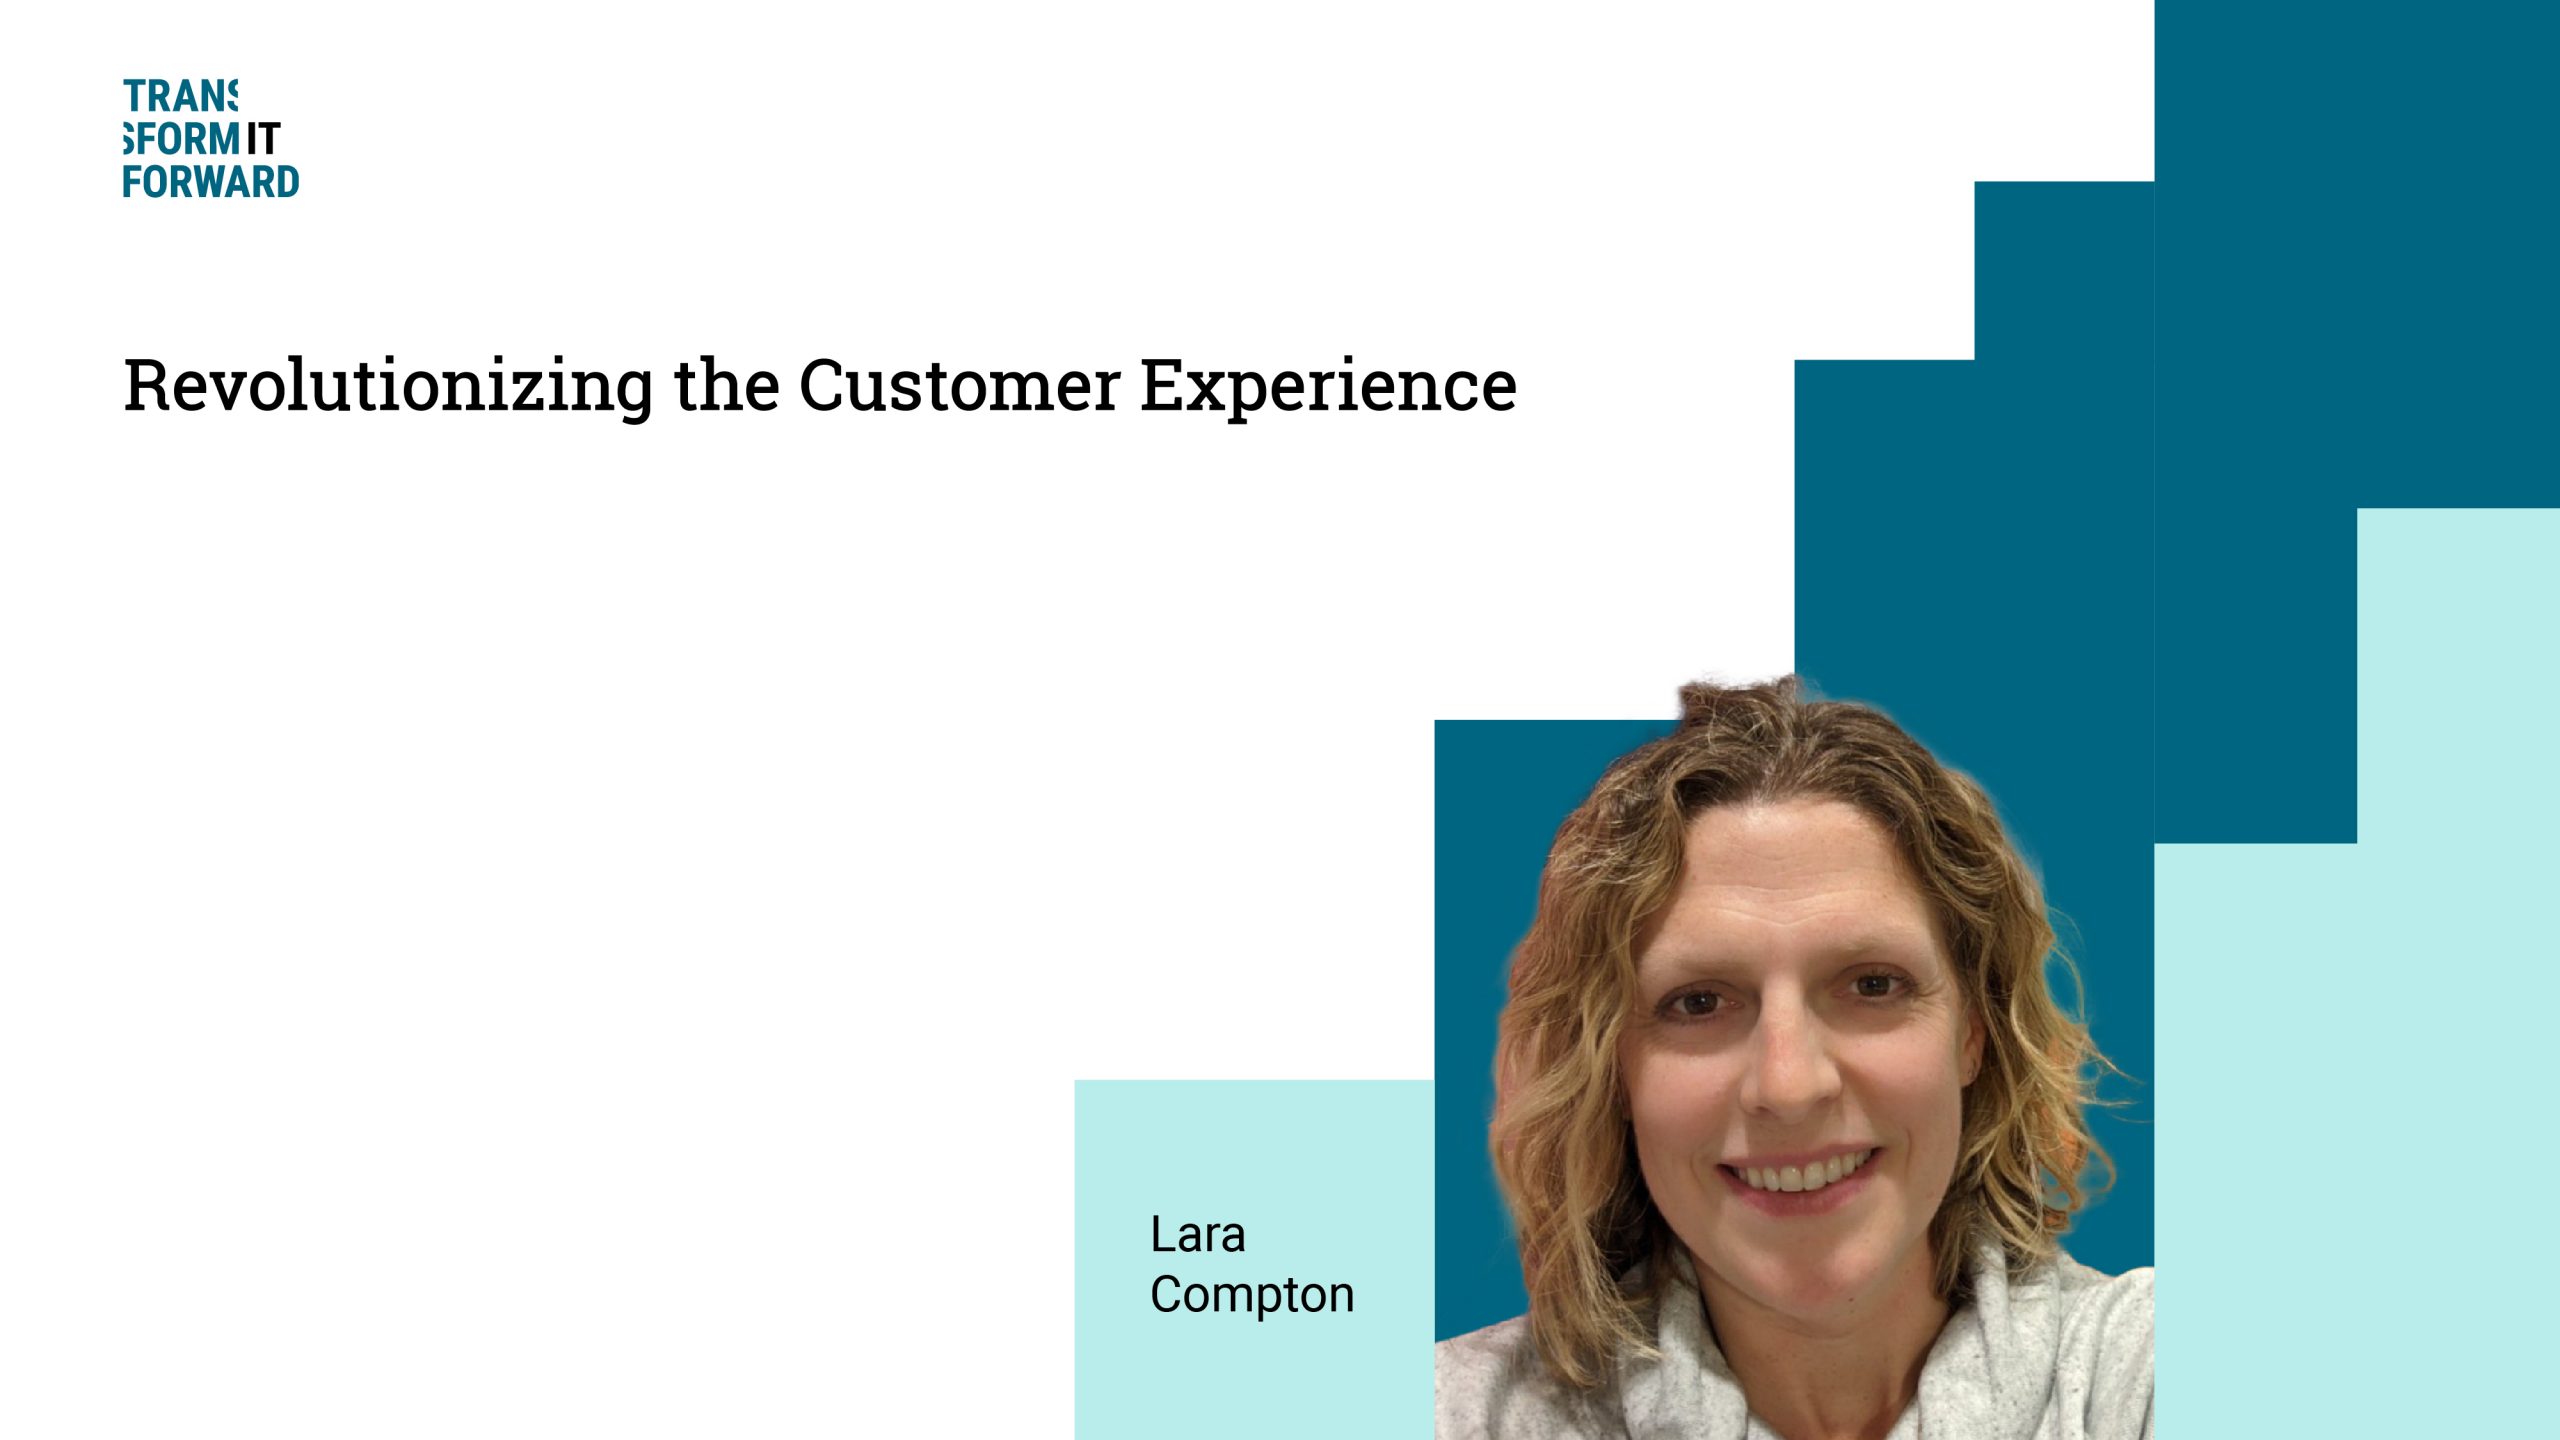 TIF-Lara Compton Transform It Forward Title Revolutionizing the customer experience_16x9